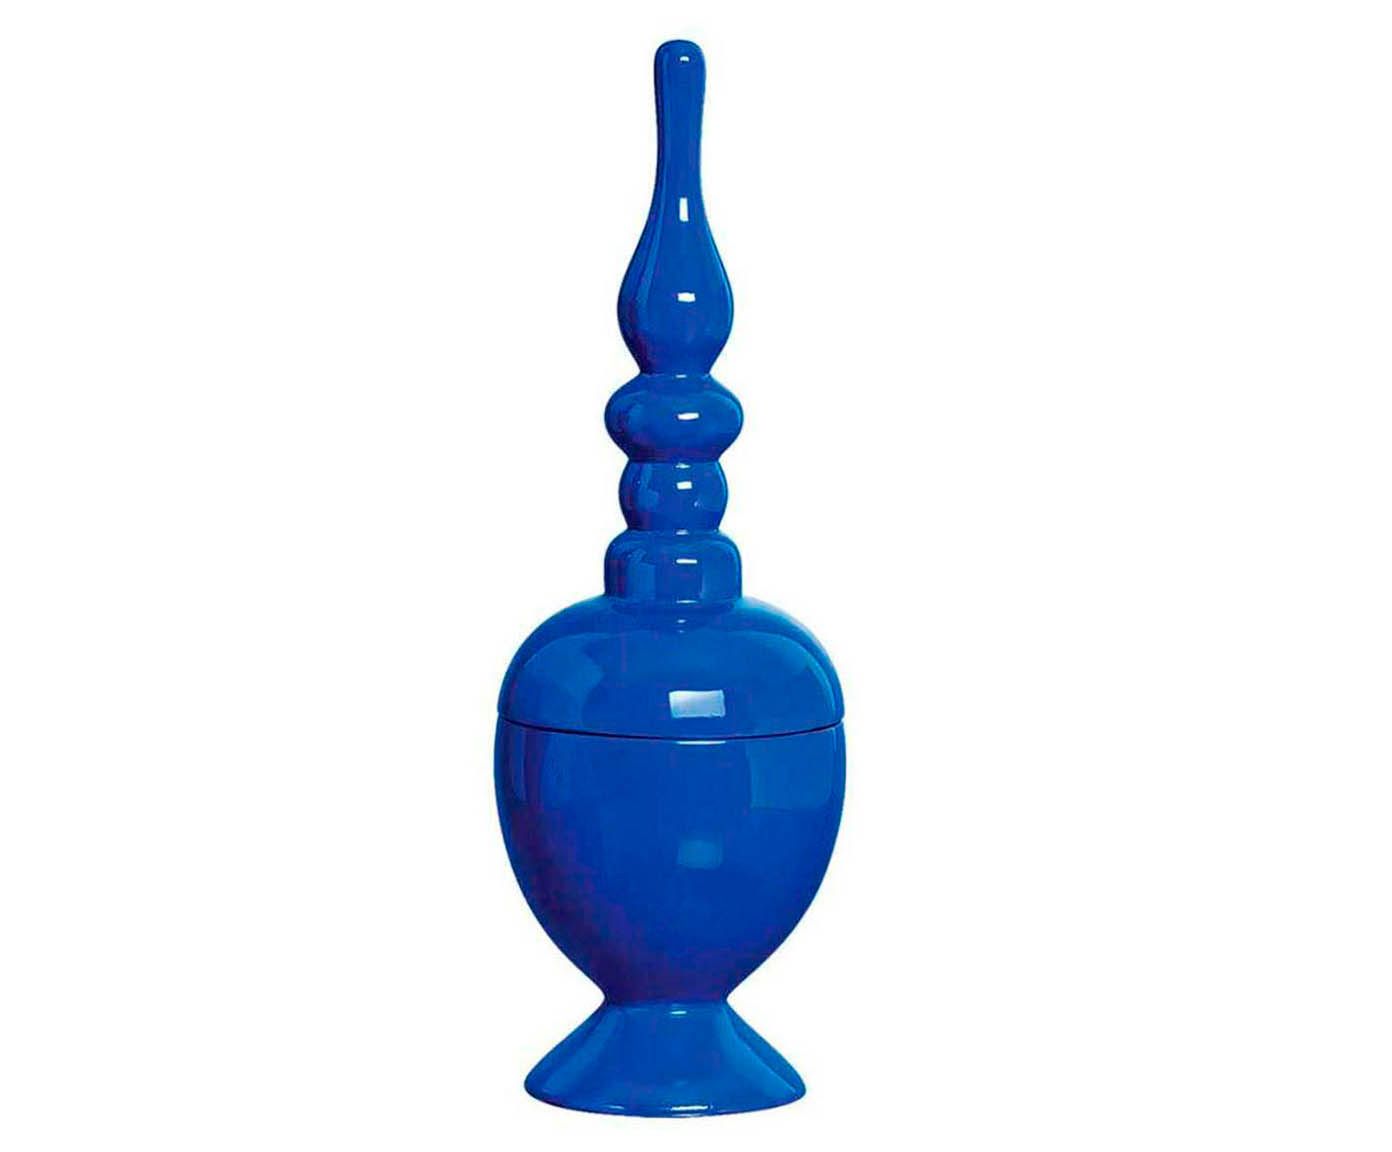 Bomboniere Sweet Azul - 49cm | Westwing.com.br